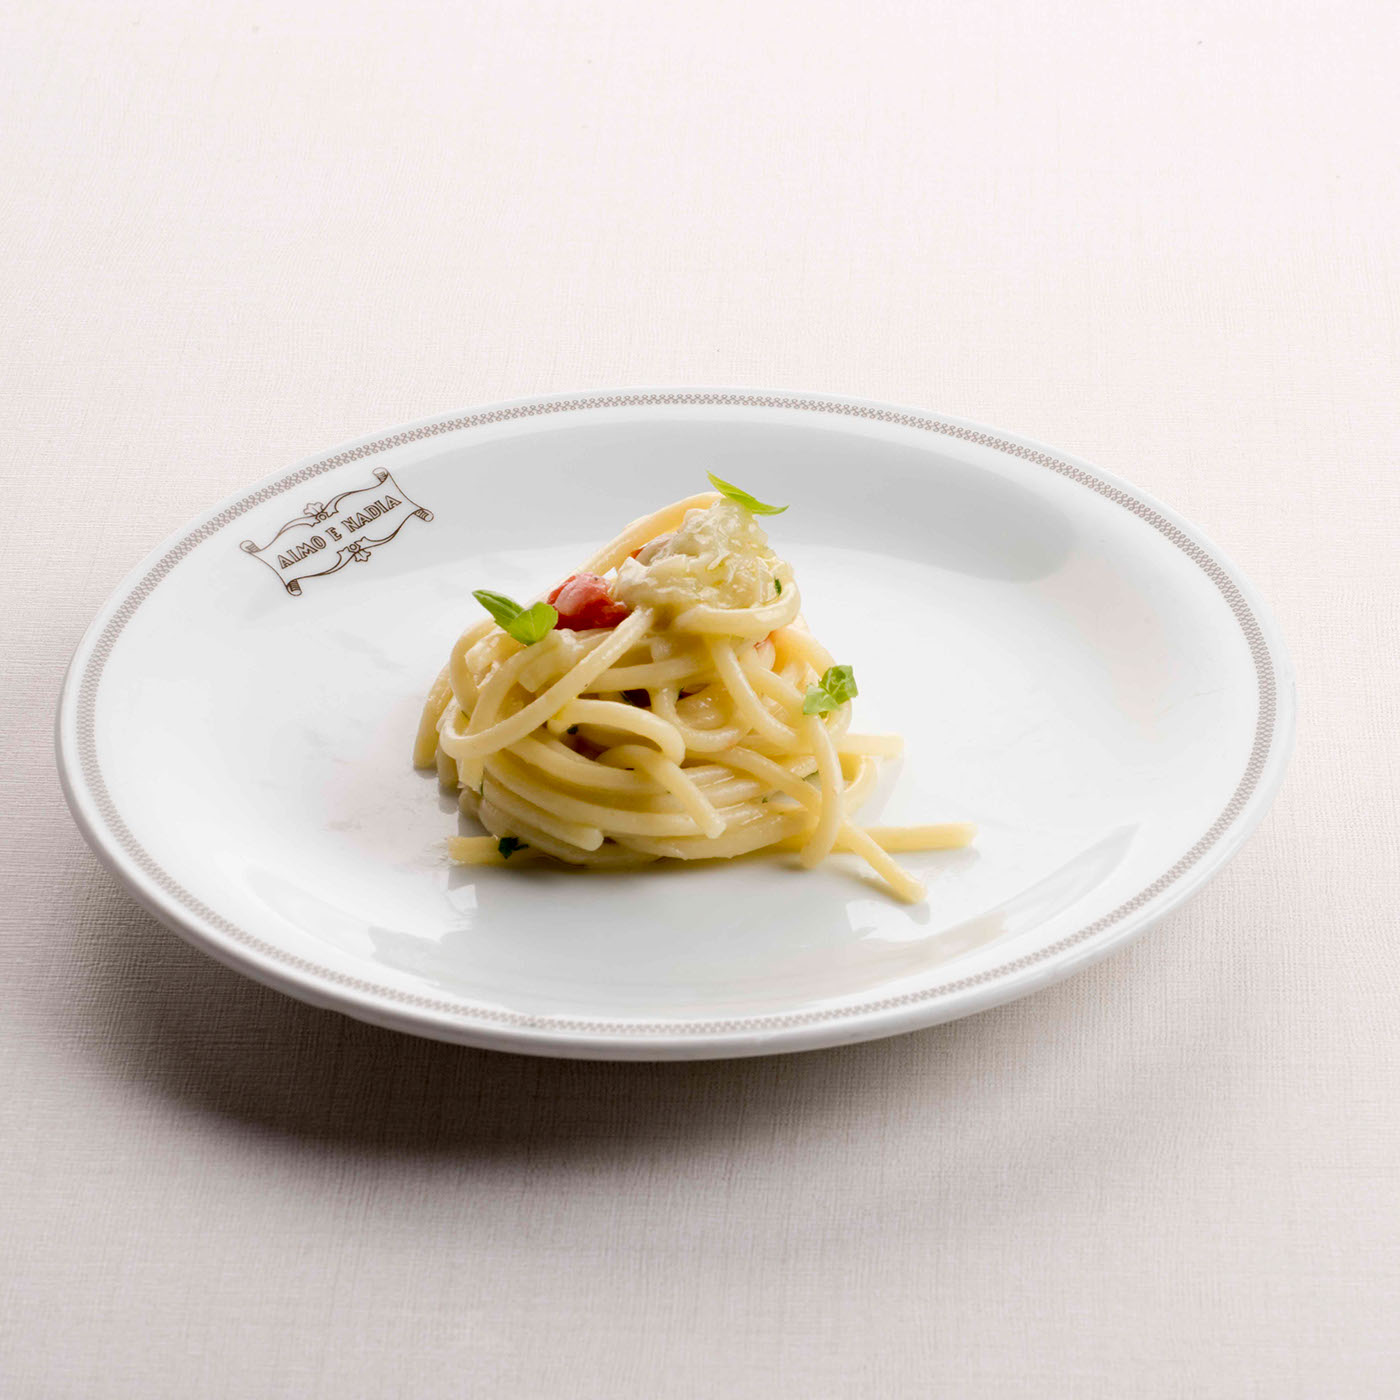 milano food photography food book aimo e nadia pisani Negrini Michelin star starred chef micheline guide relais et châteaux